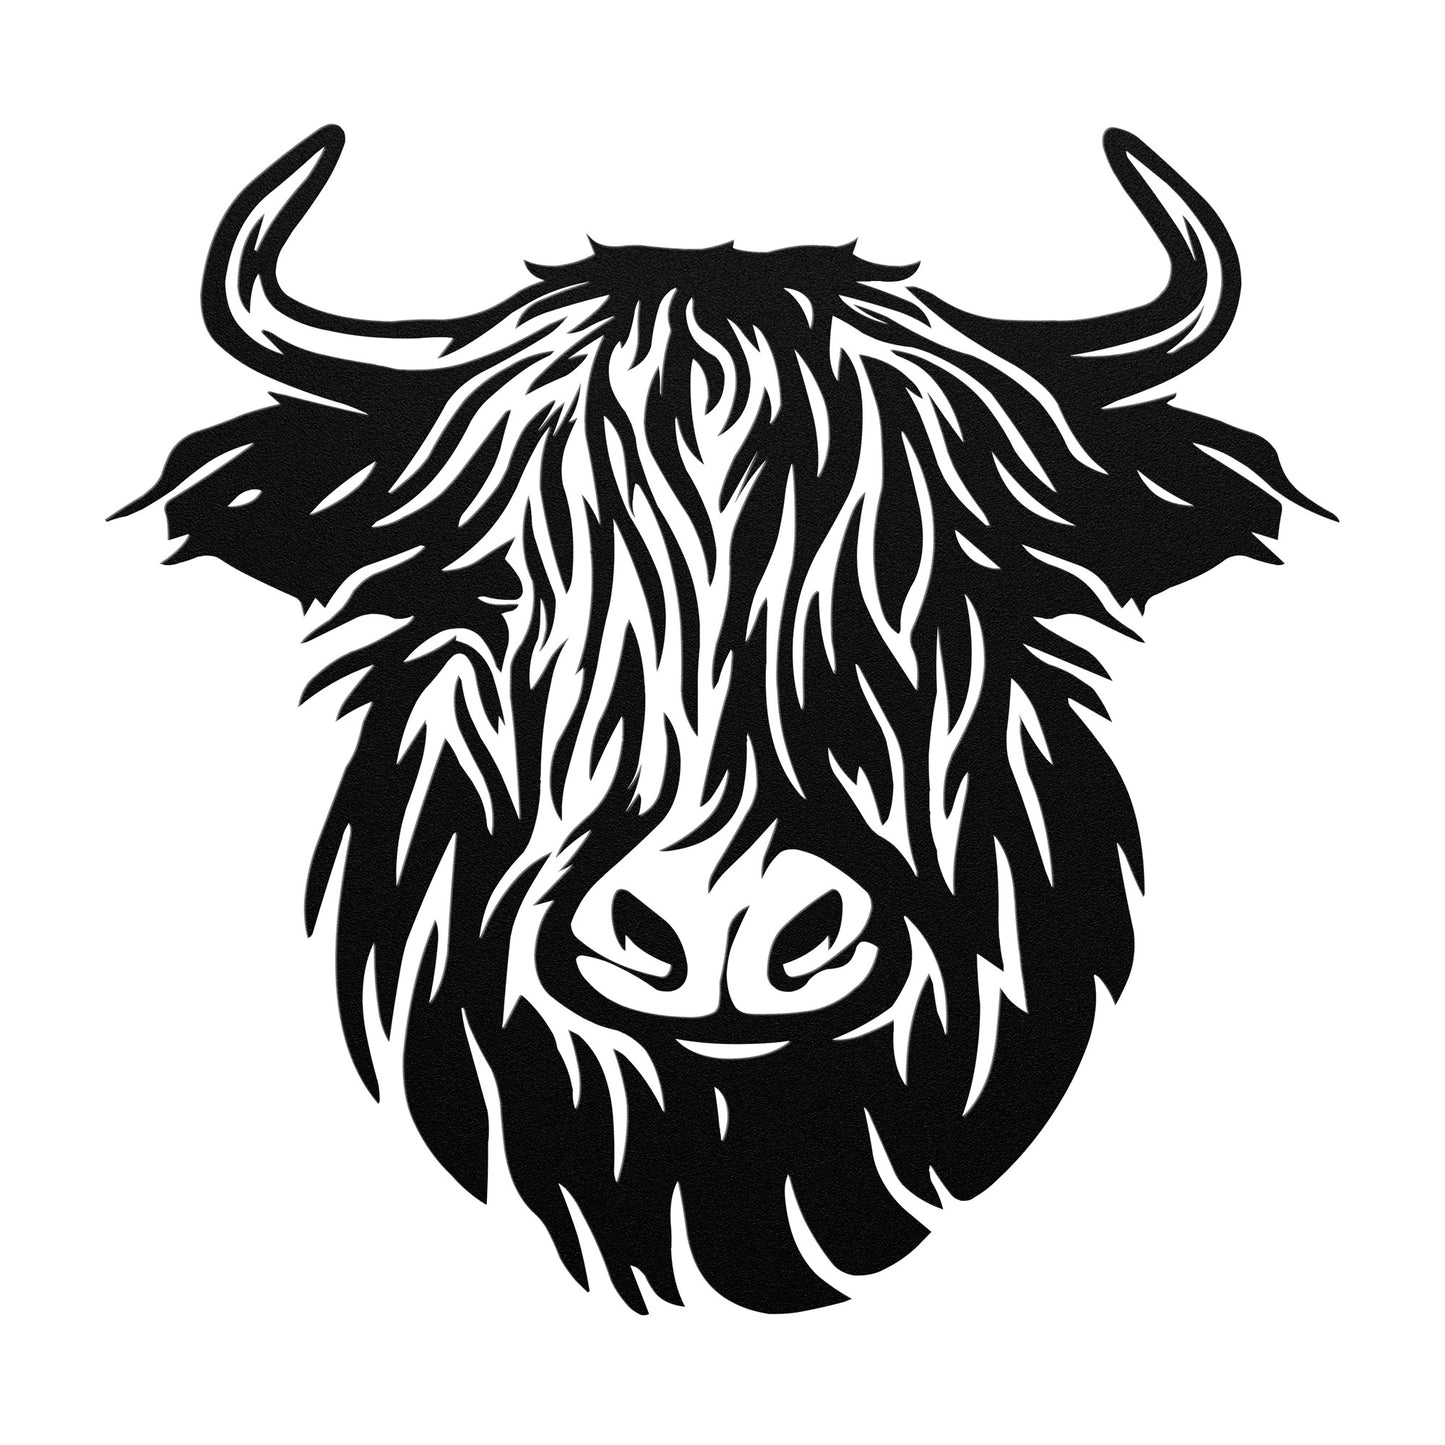 Scottish Highland Cow Metal Wall Art